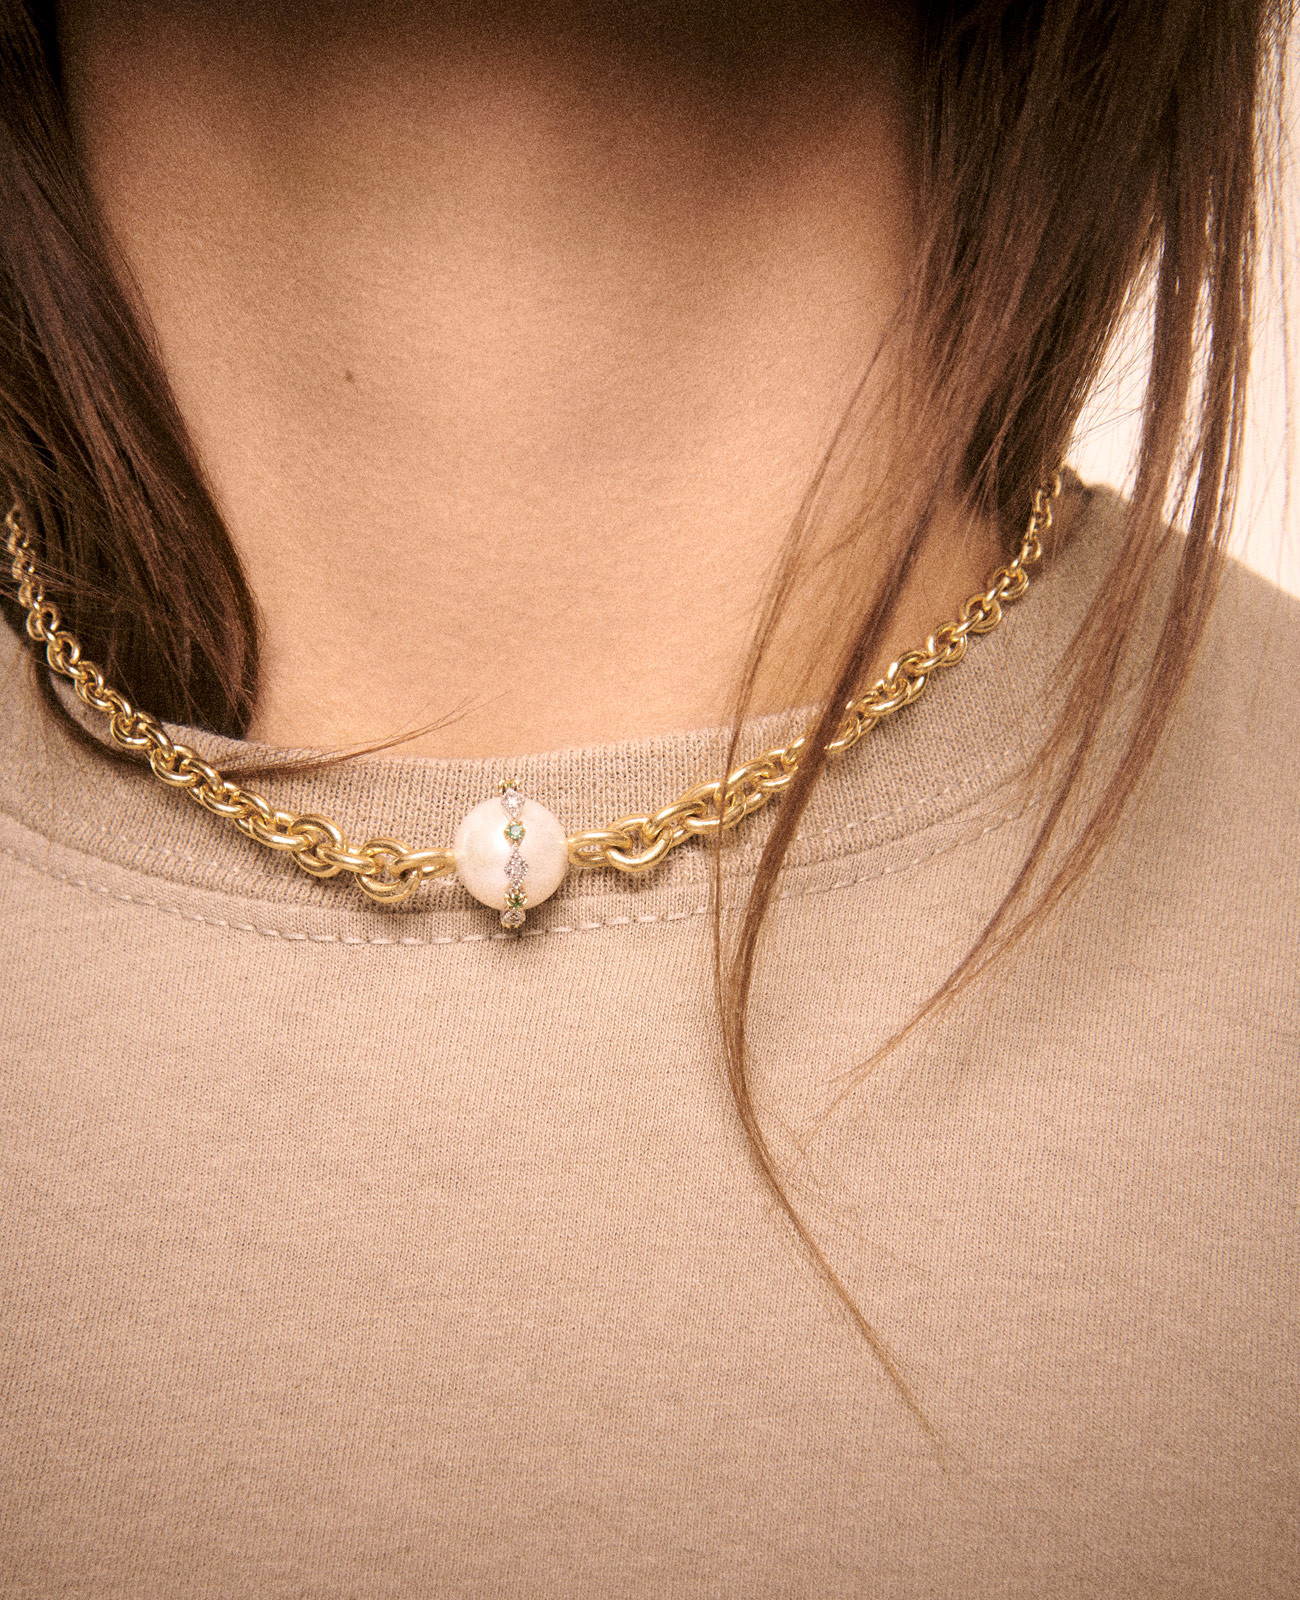 CHELSEA N°3 necklace pascale monvoisin jewelry paris